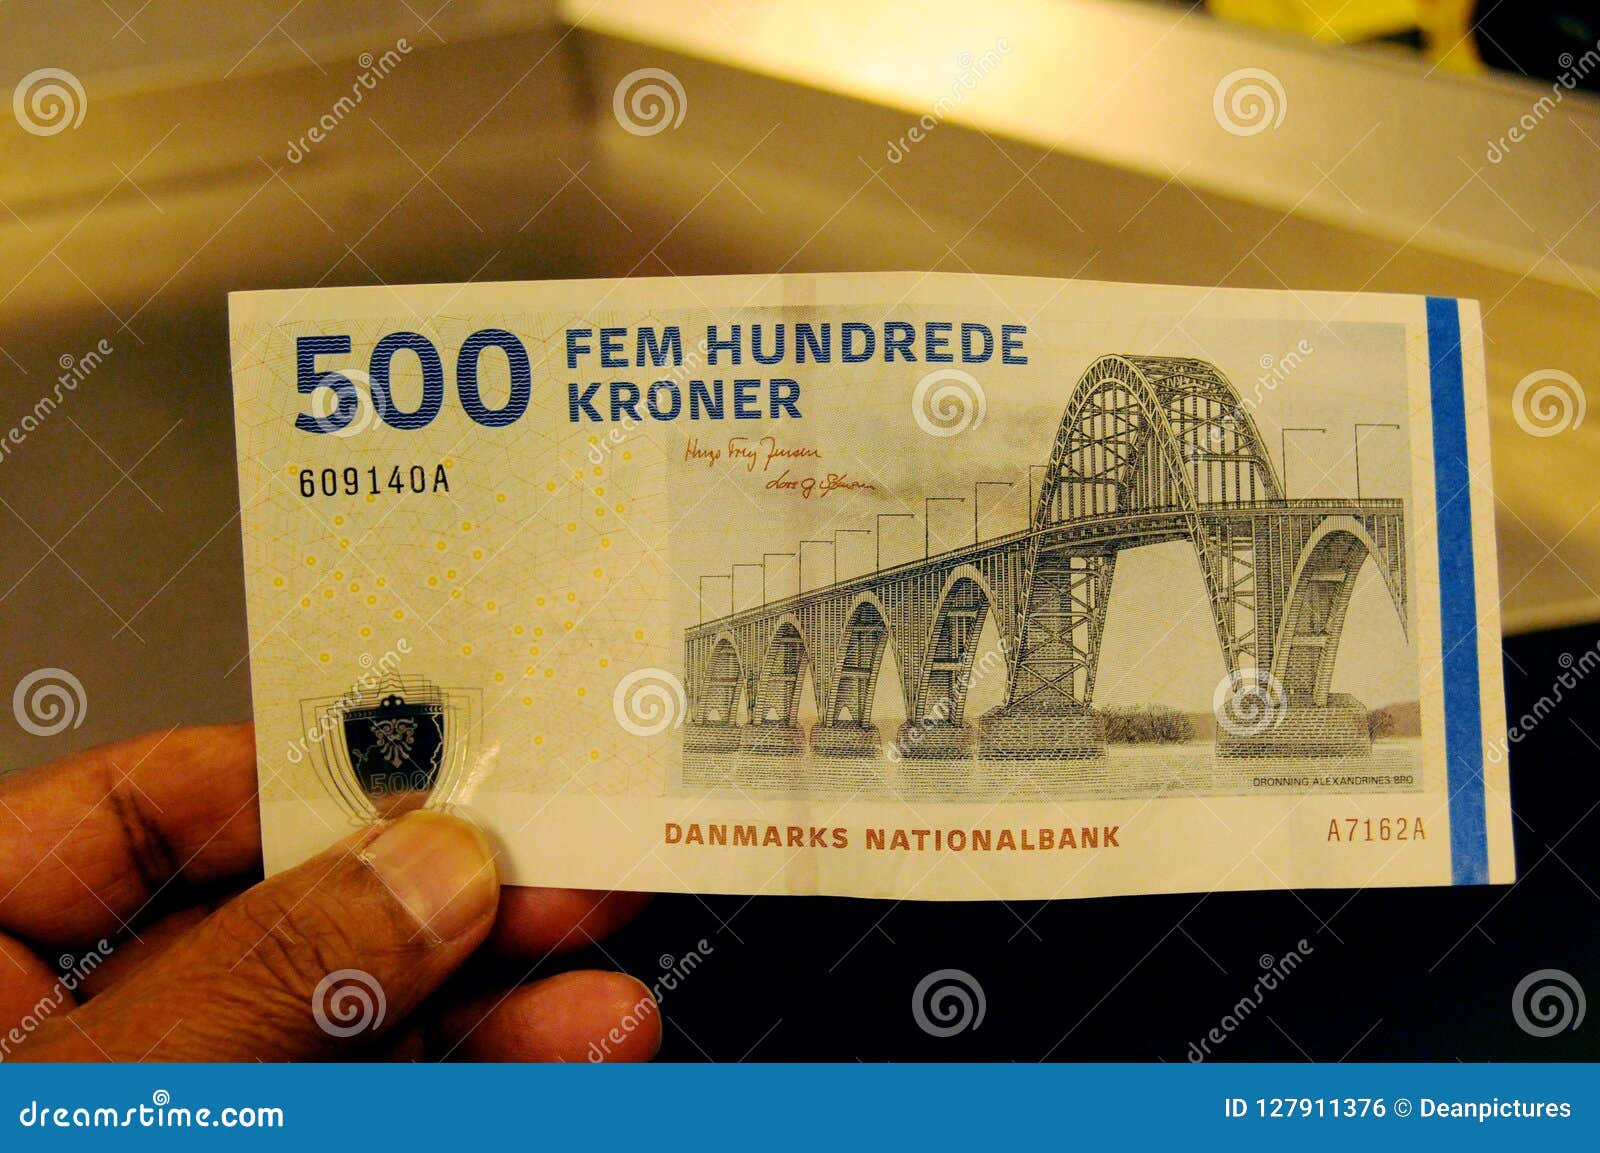 500 Danish Kroner in Paper Bill Editorial Photo of eocnomy, editor: 127911376